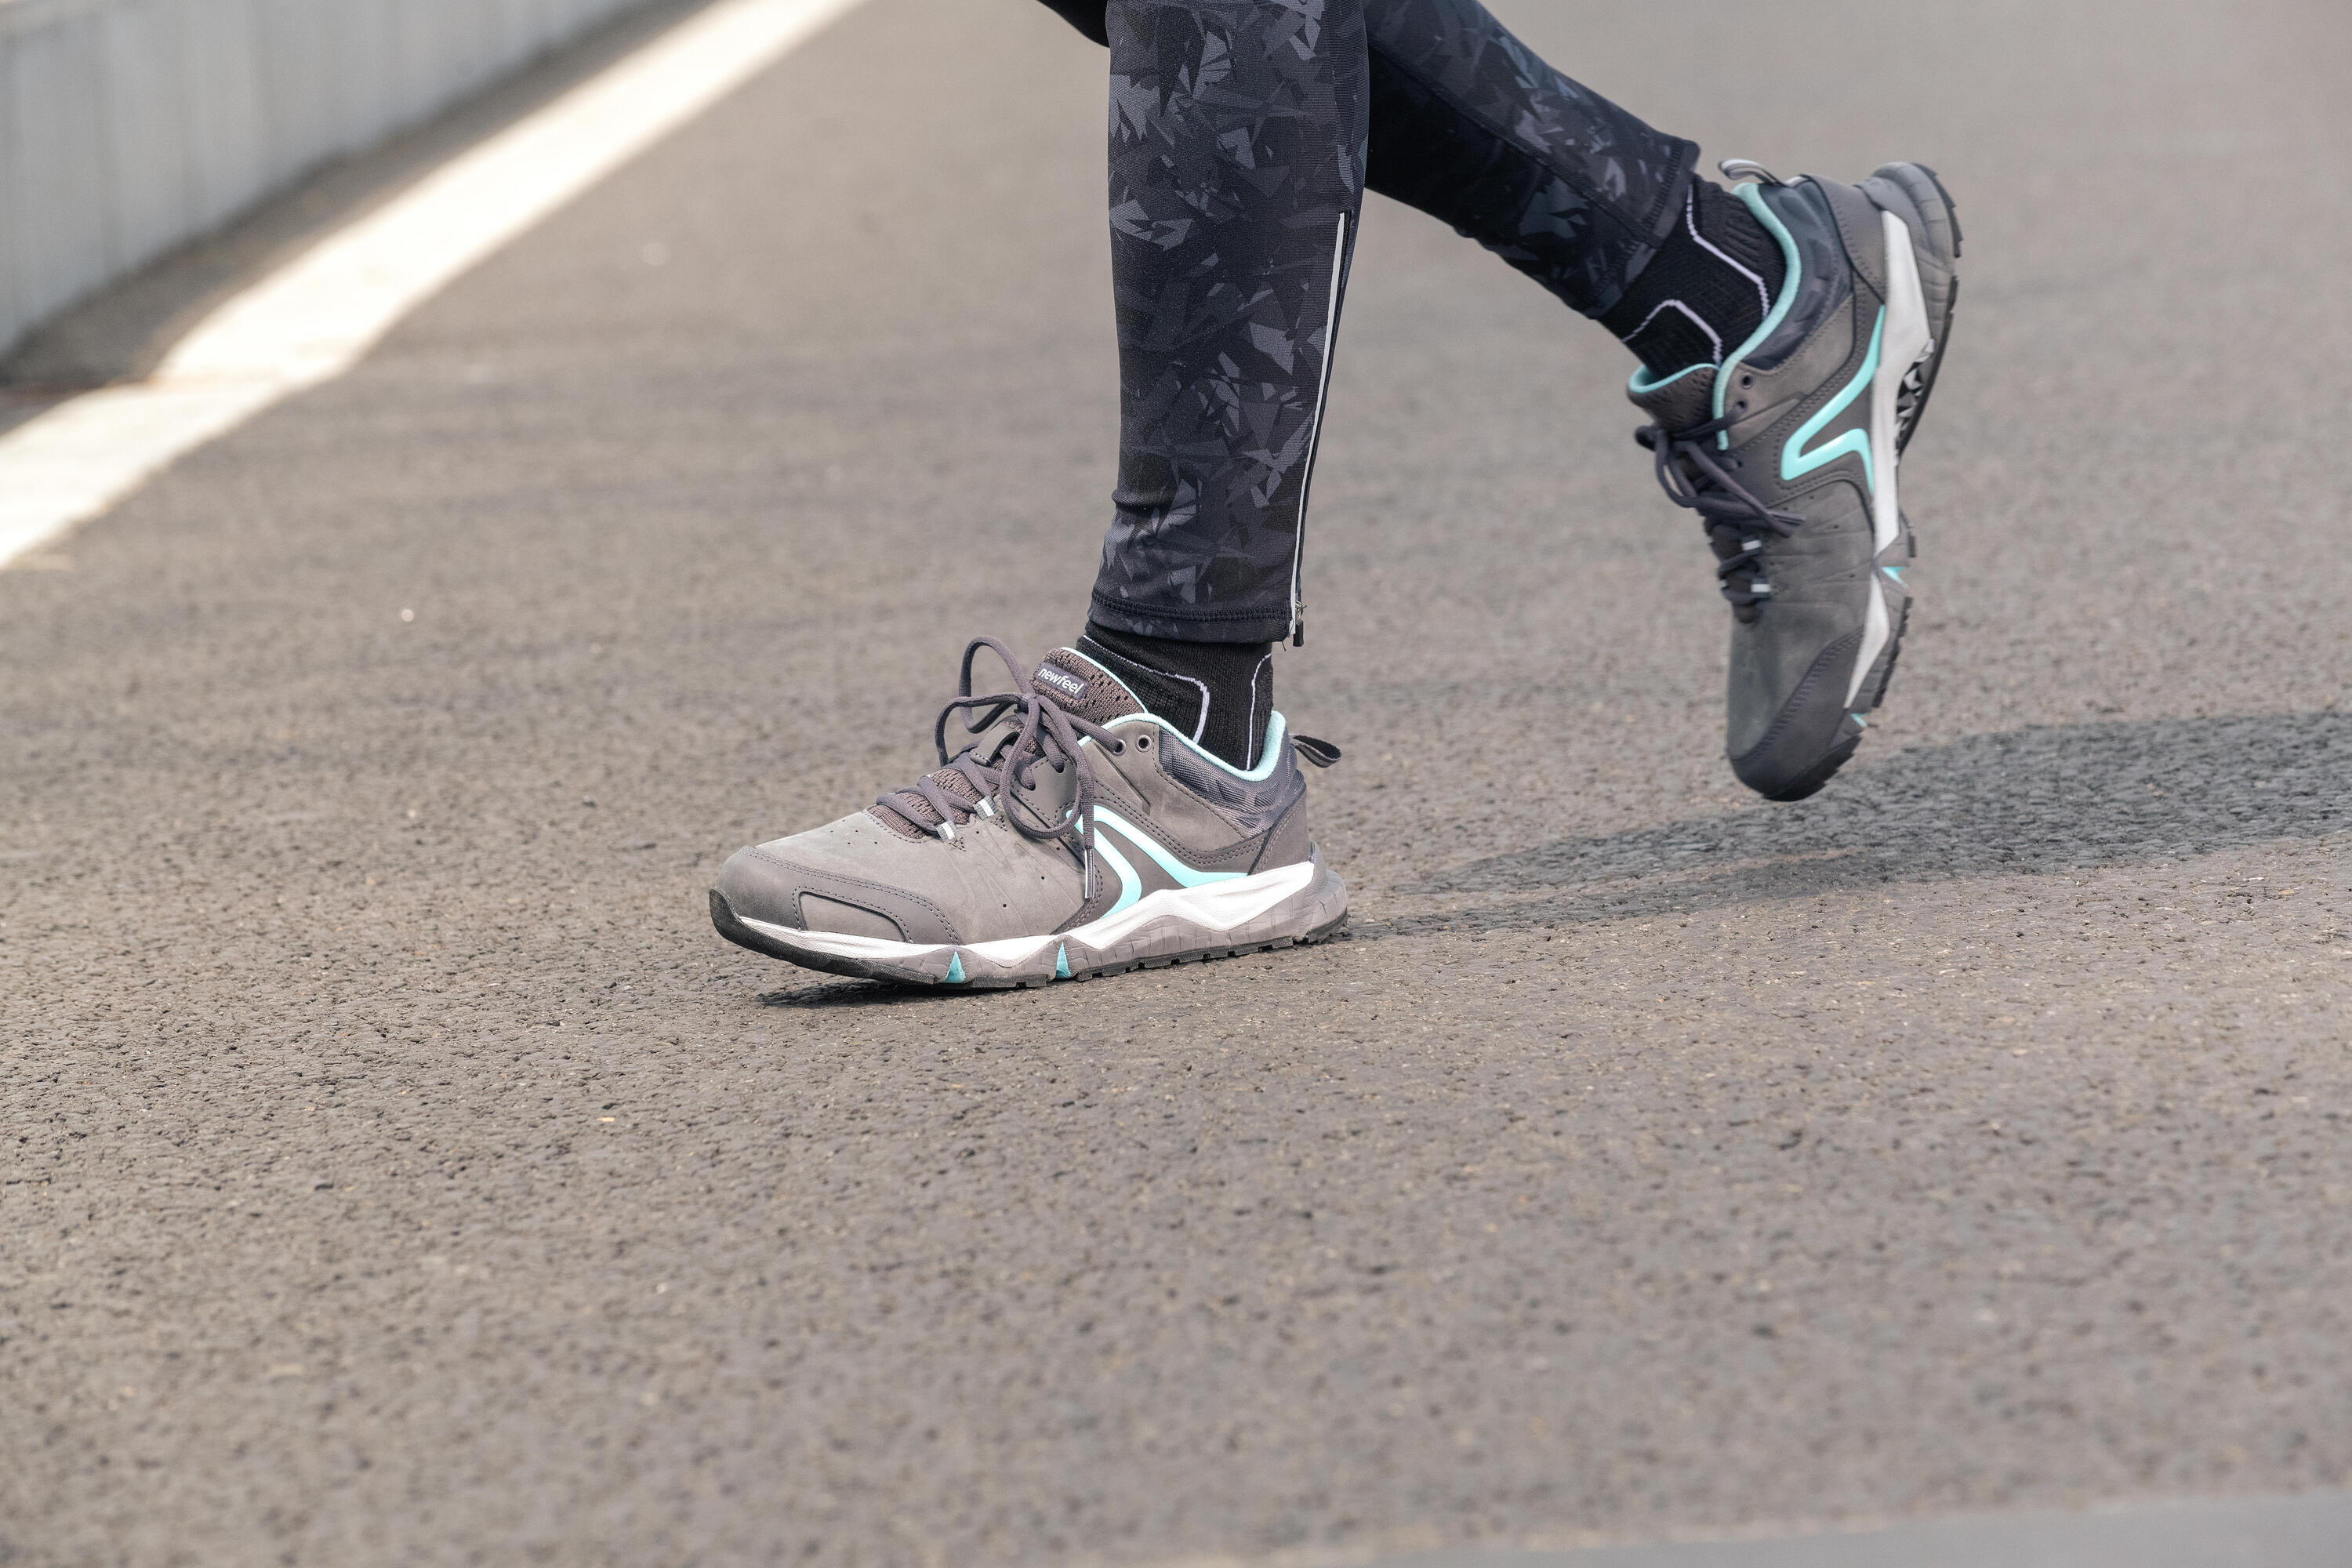 PW 940 Propulse Motion Women's Fitness Walking Shoes leather grey/blue 2/10